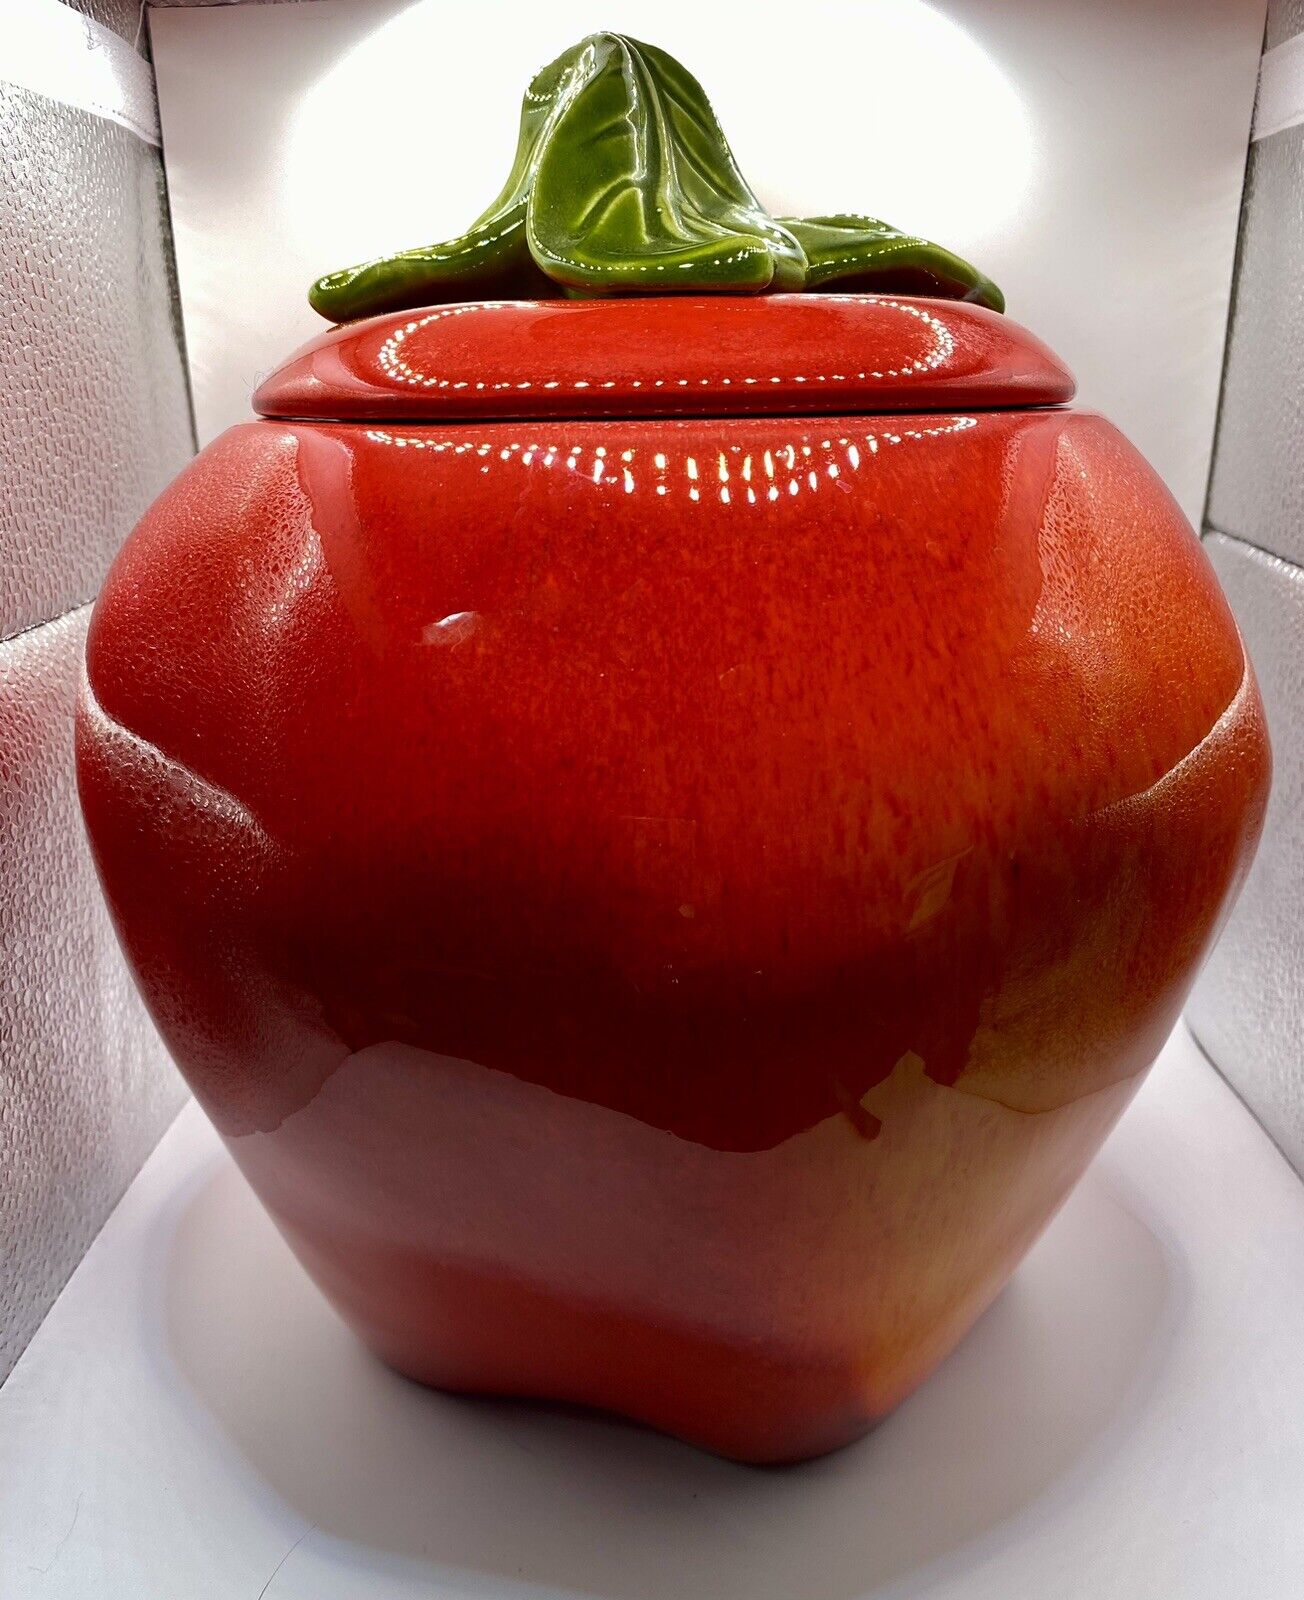 Vintage Maurice of California, USA Ceramic Red Apple Cookie Jar, model FR-214